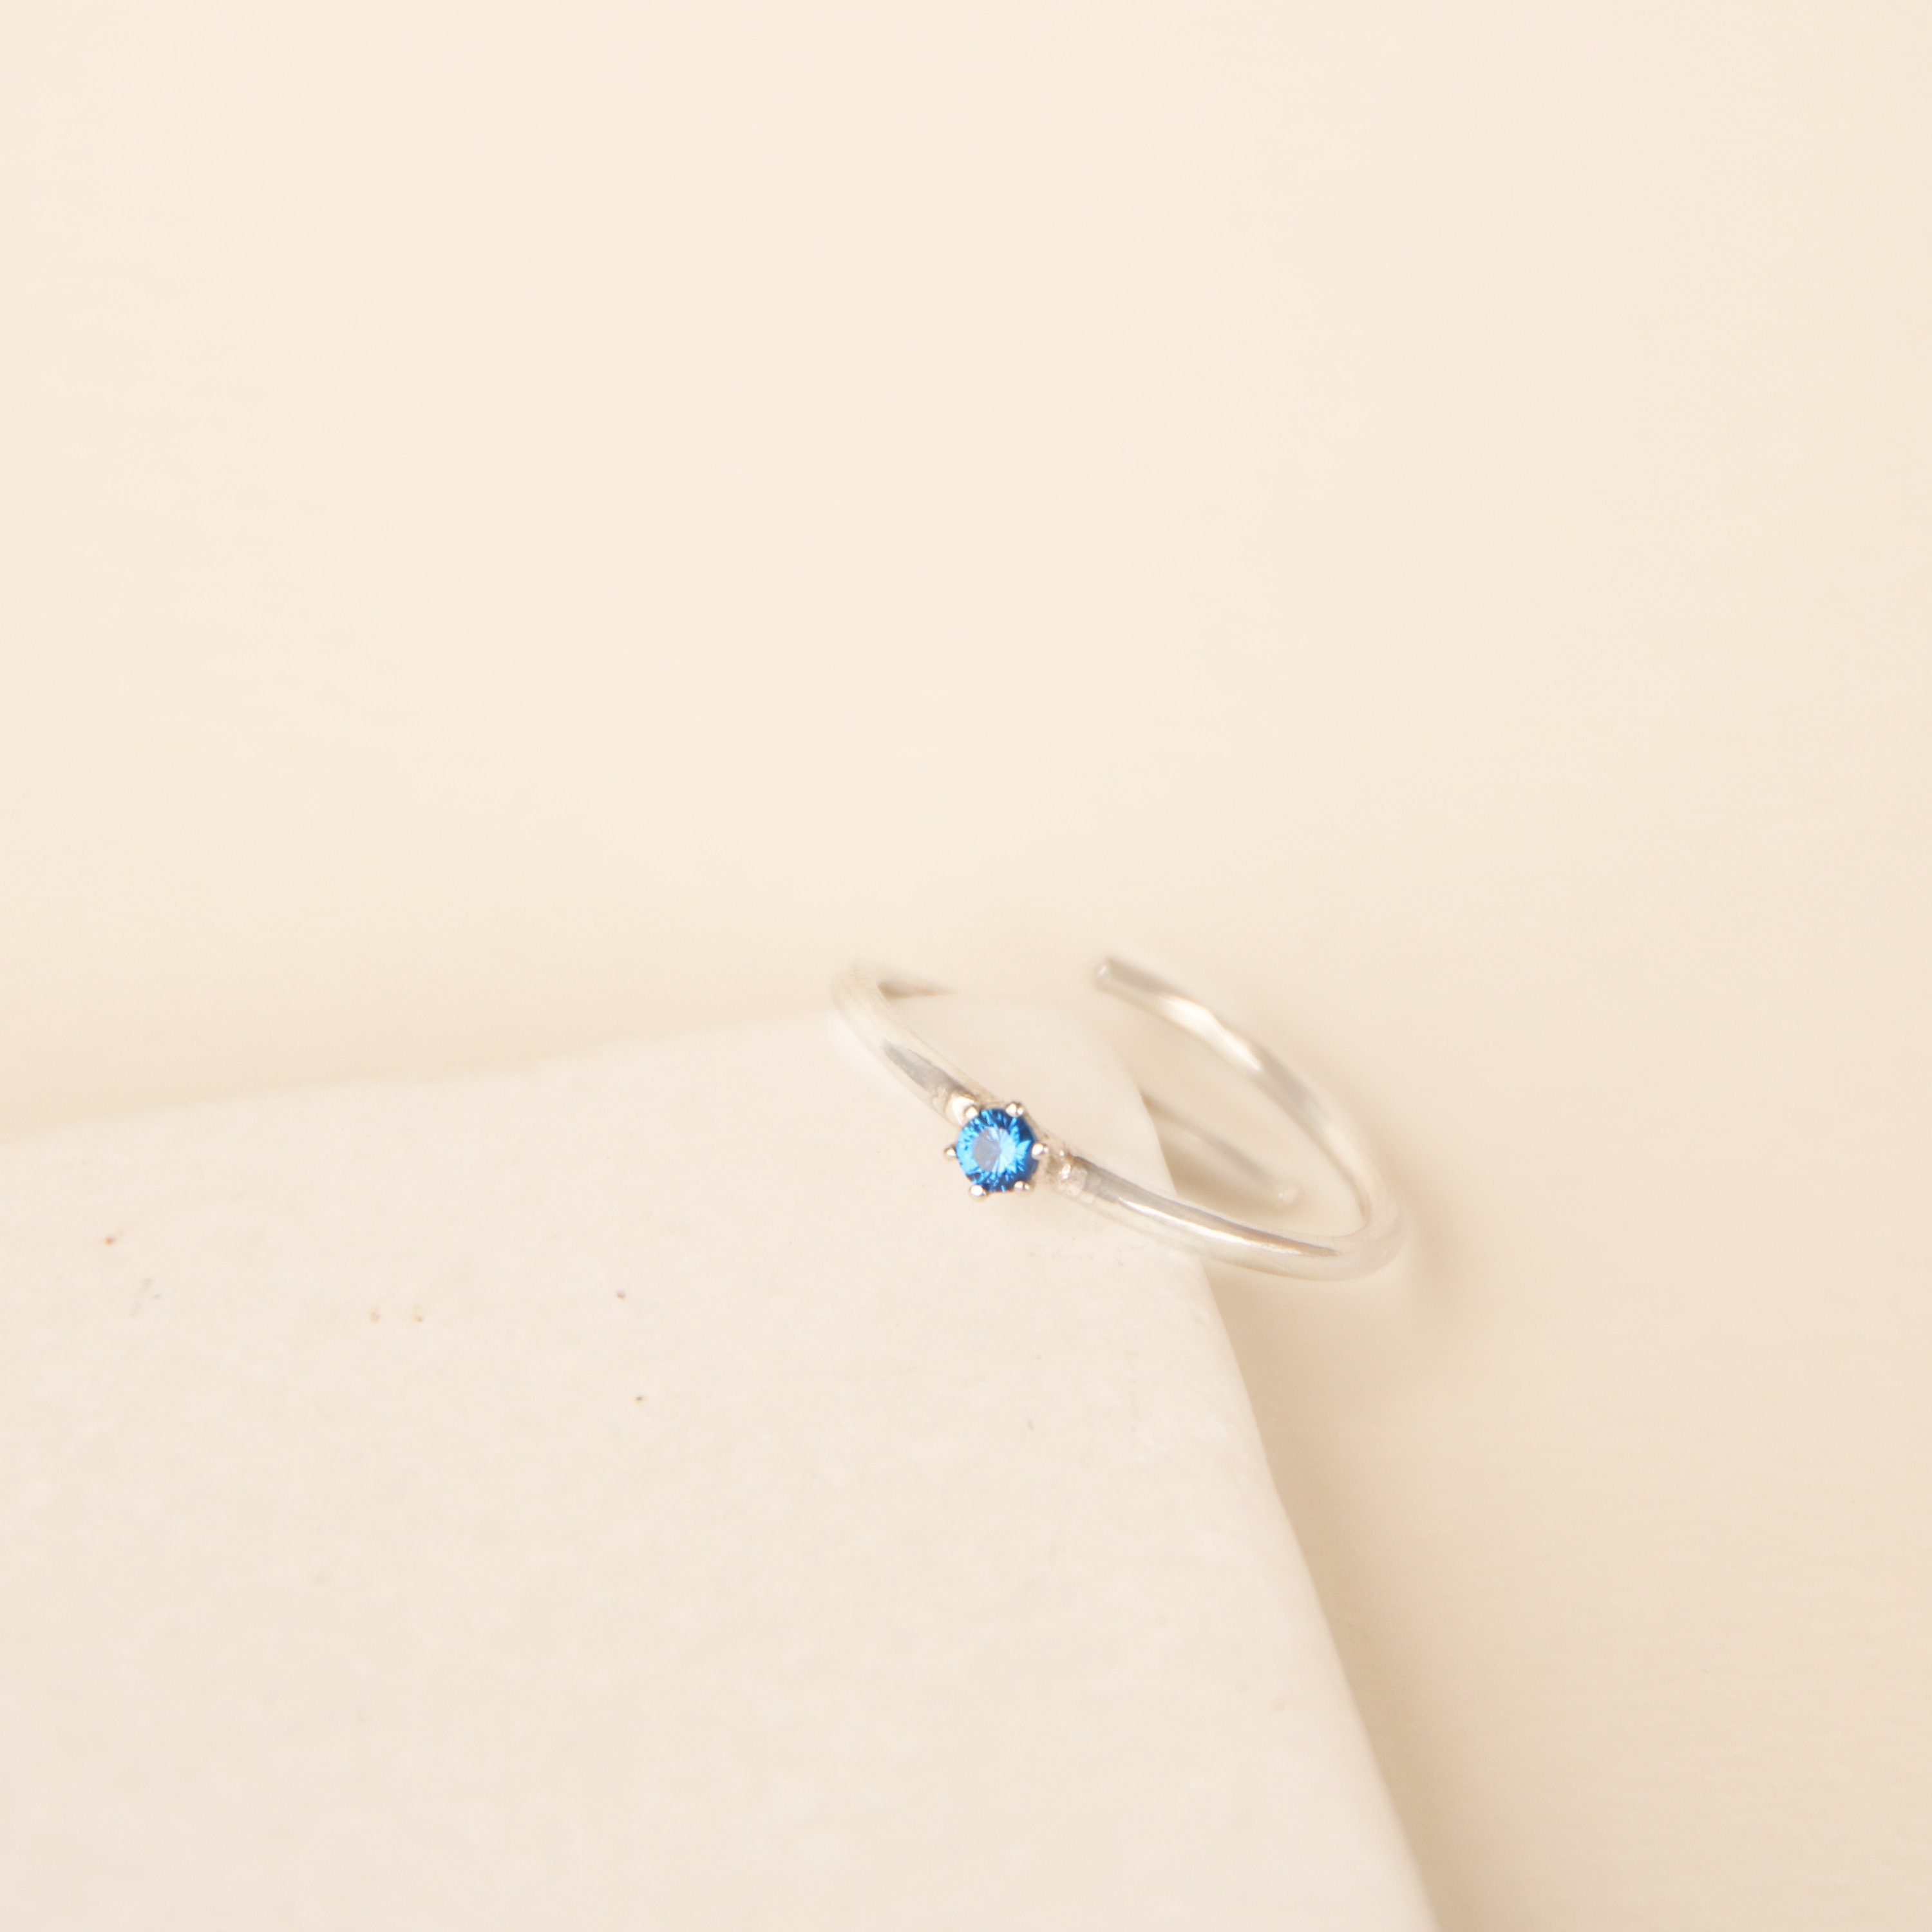 Minimalist Gemstone Ring, Gemstone Ring in Sterling Silver, Dainty & Delicate Birthstone Birthstone Ring